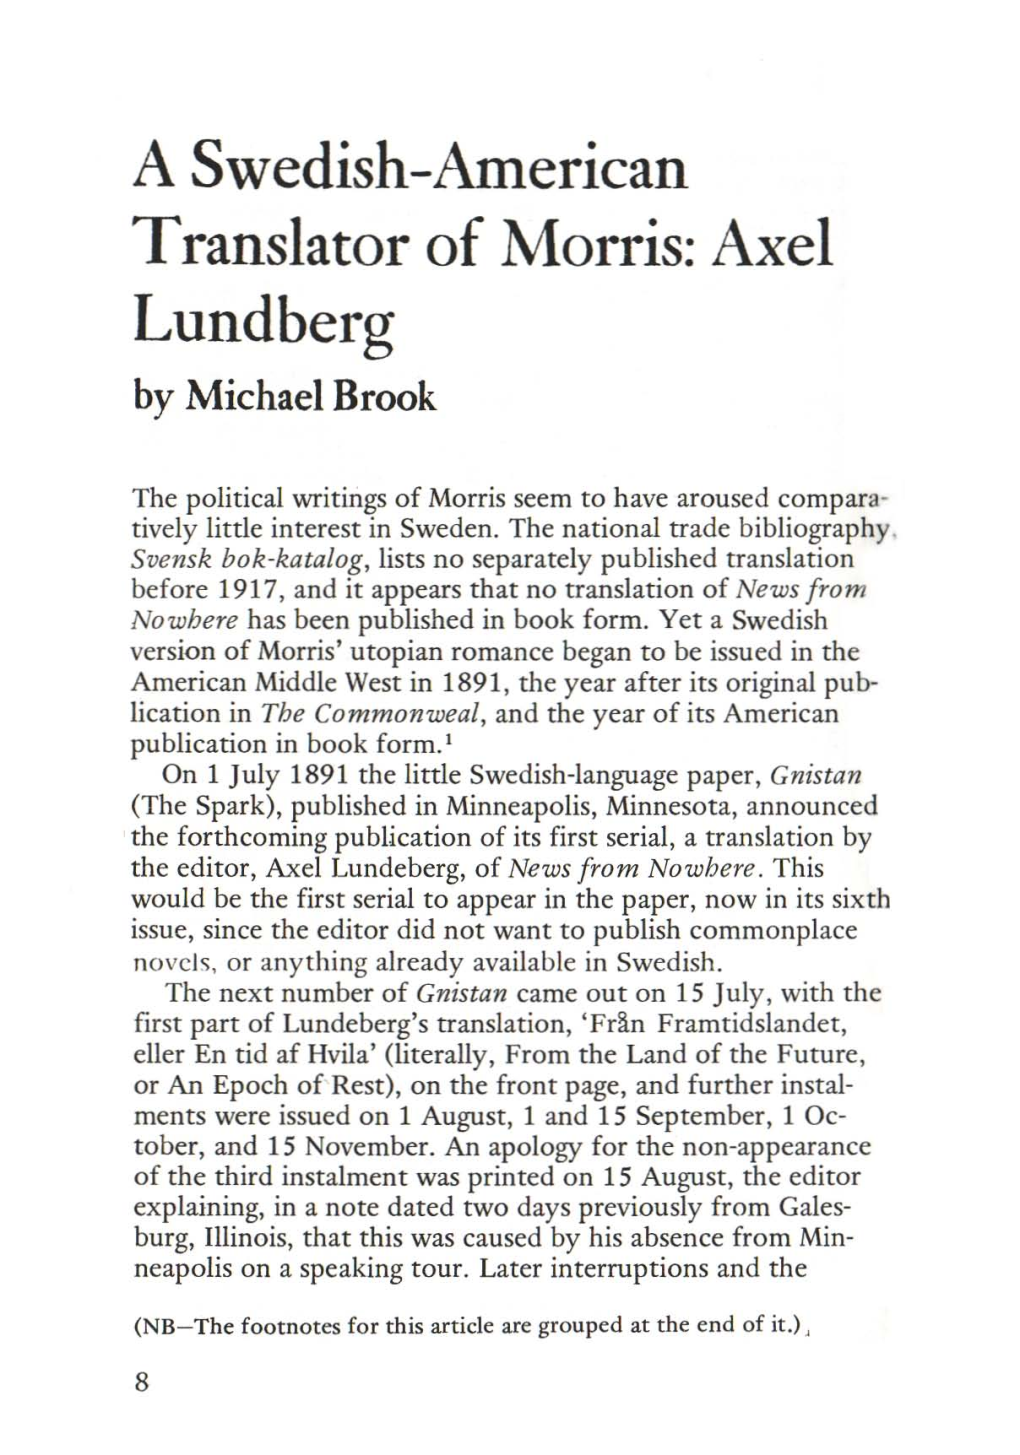 A Swedish-American Translator of Morris: Axel Lundberg by Michael Brook